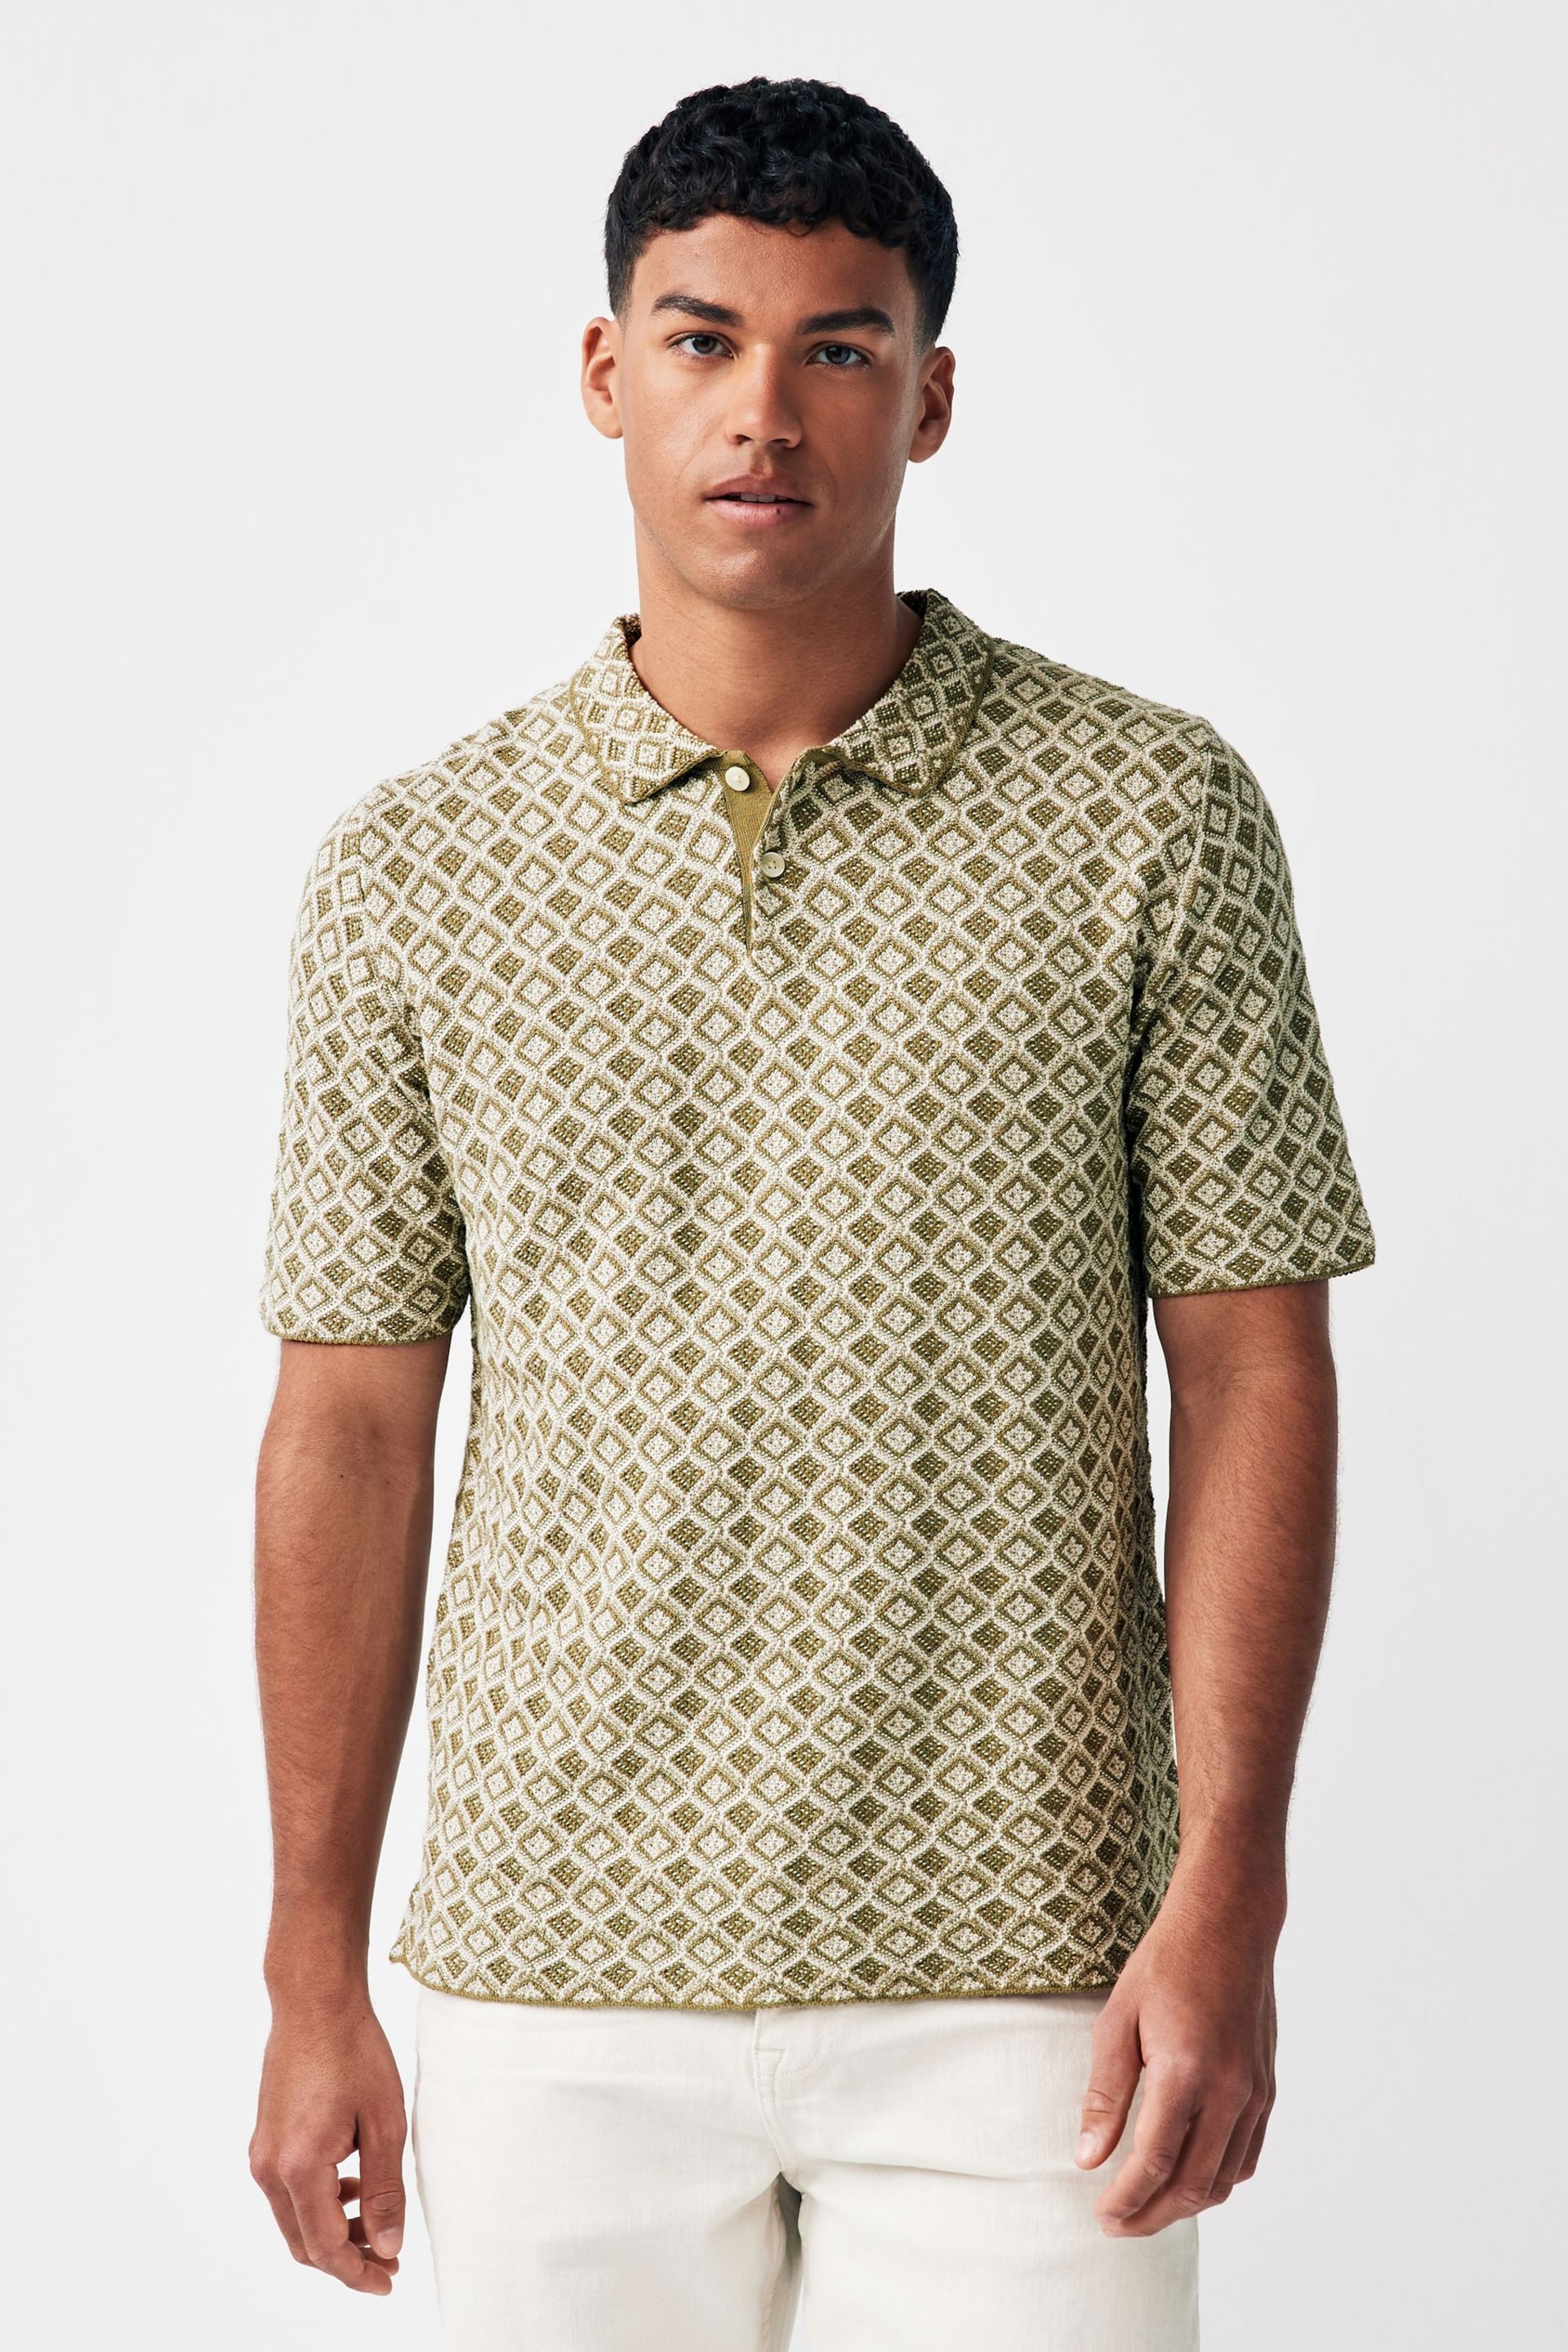 JACK & JONES Green Textured Geo Print Knitted Smart Polo Shirt - Image 1 of 5